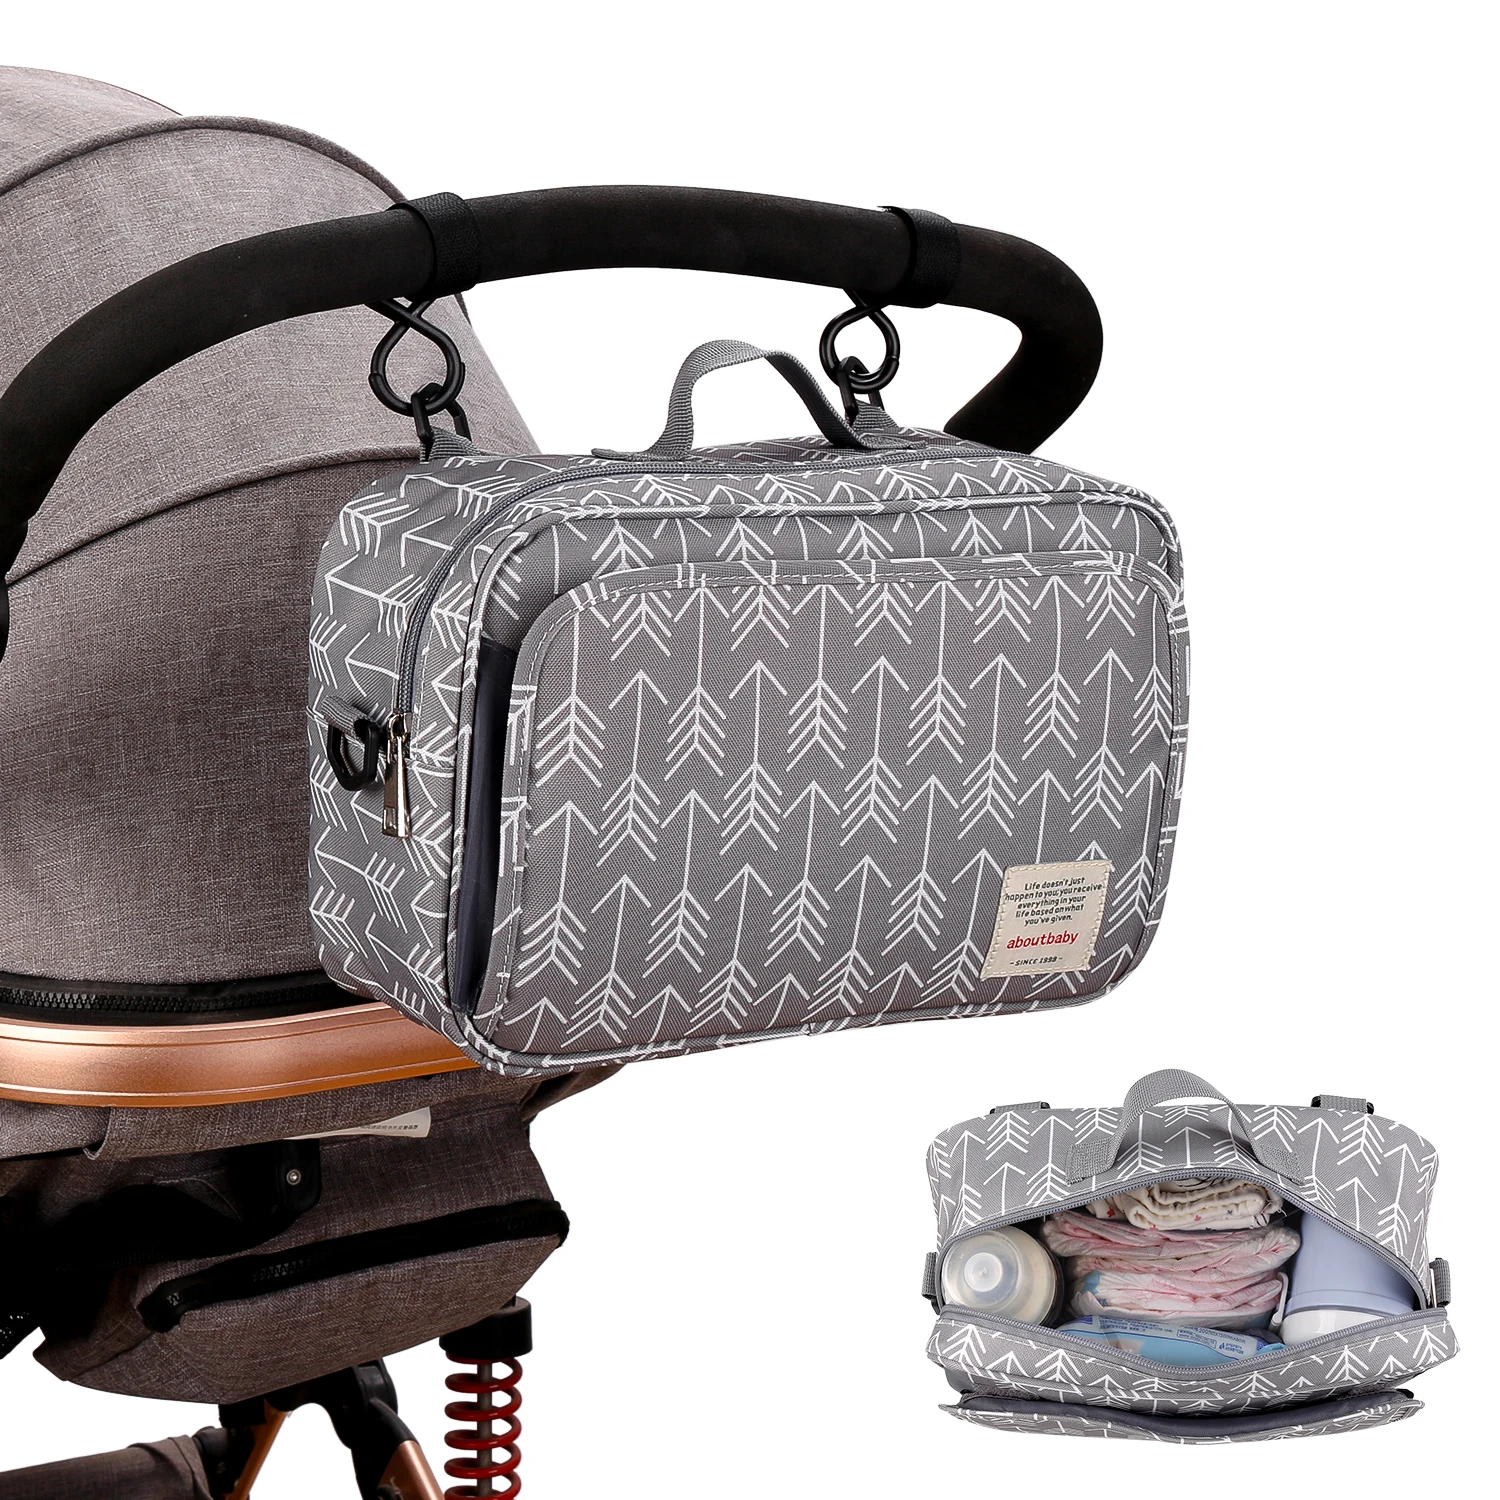 

PatPat Baby Diaper Caddy Organizer Portable Holder Bag Multifunctional Kids Diapers Nappy Changing Maternity Handbags Bag